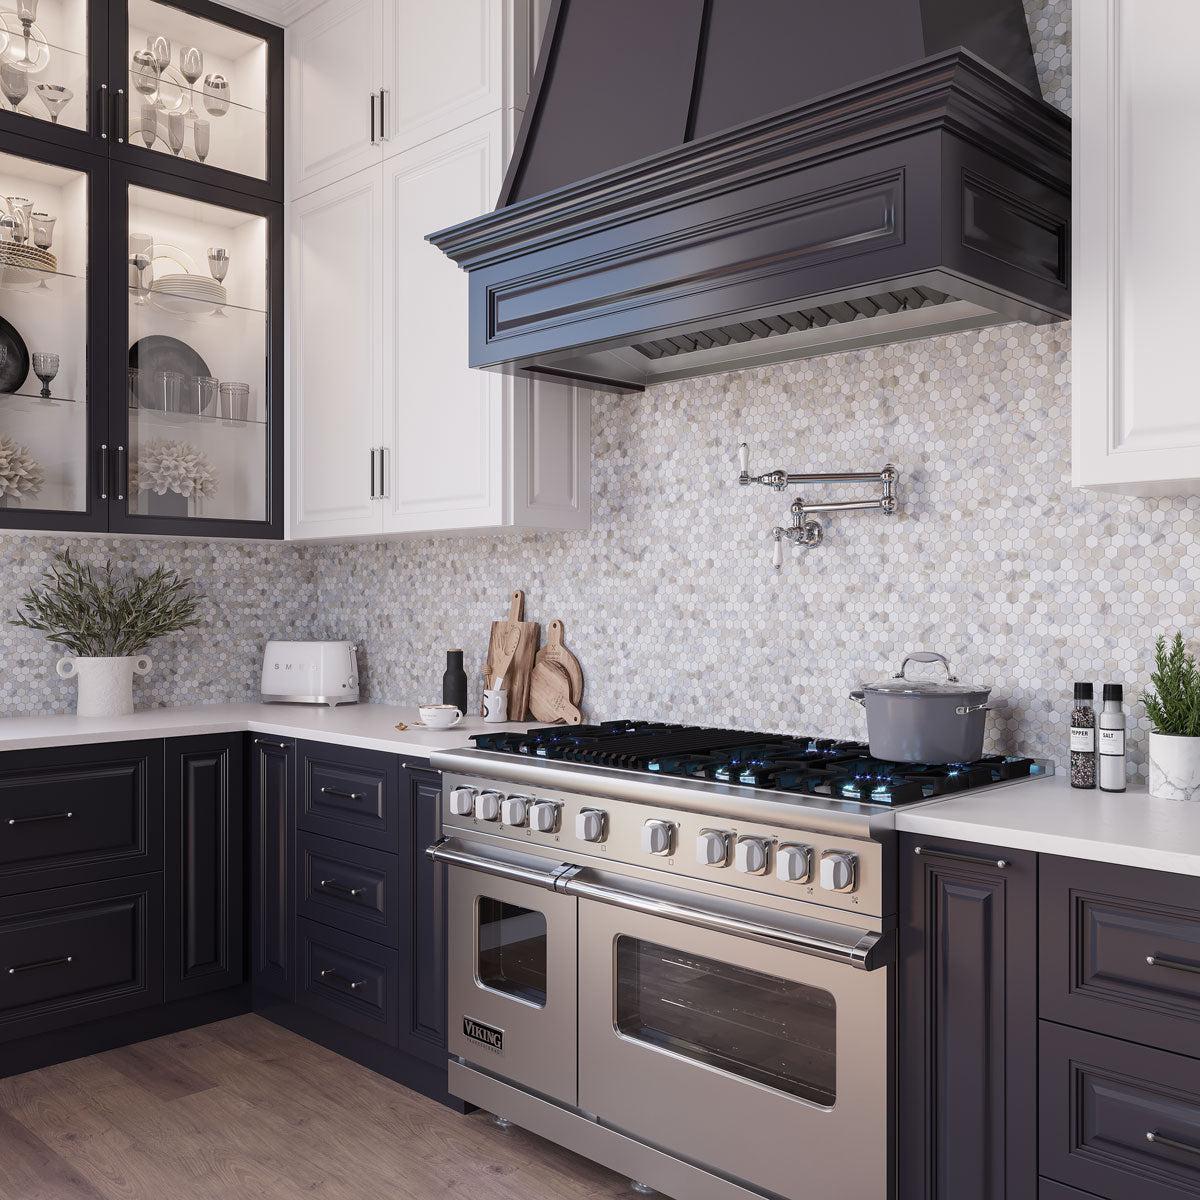 Traditional kitchen design with Calacatta Gold marble hexagon backsplash tiles under a custom range hood